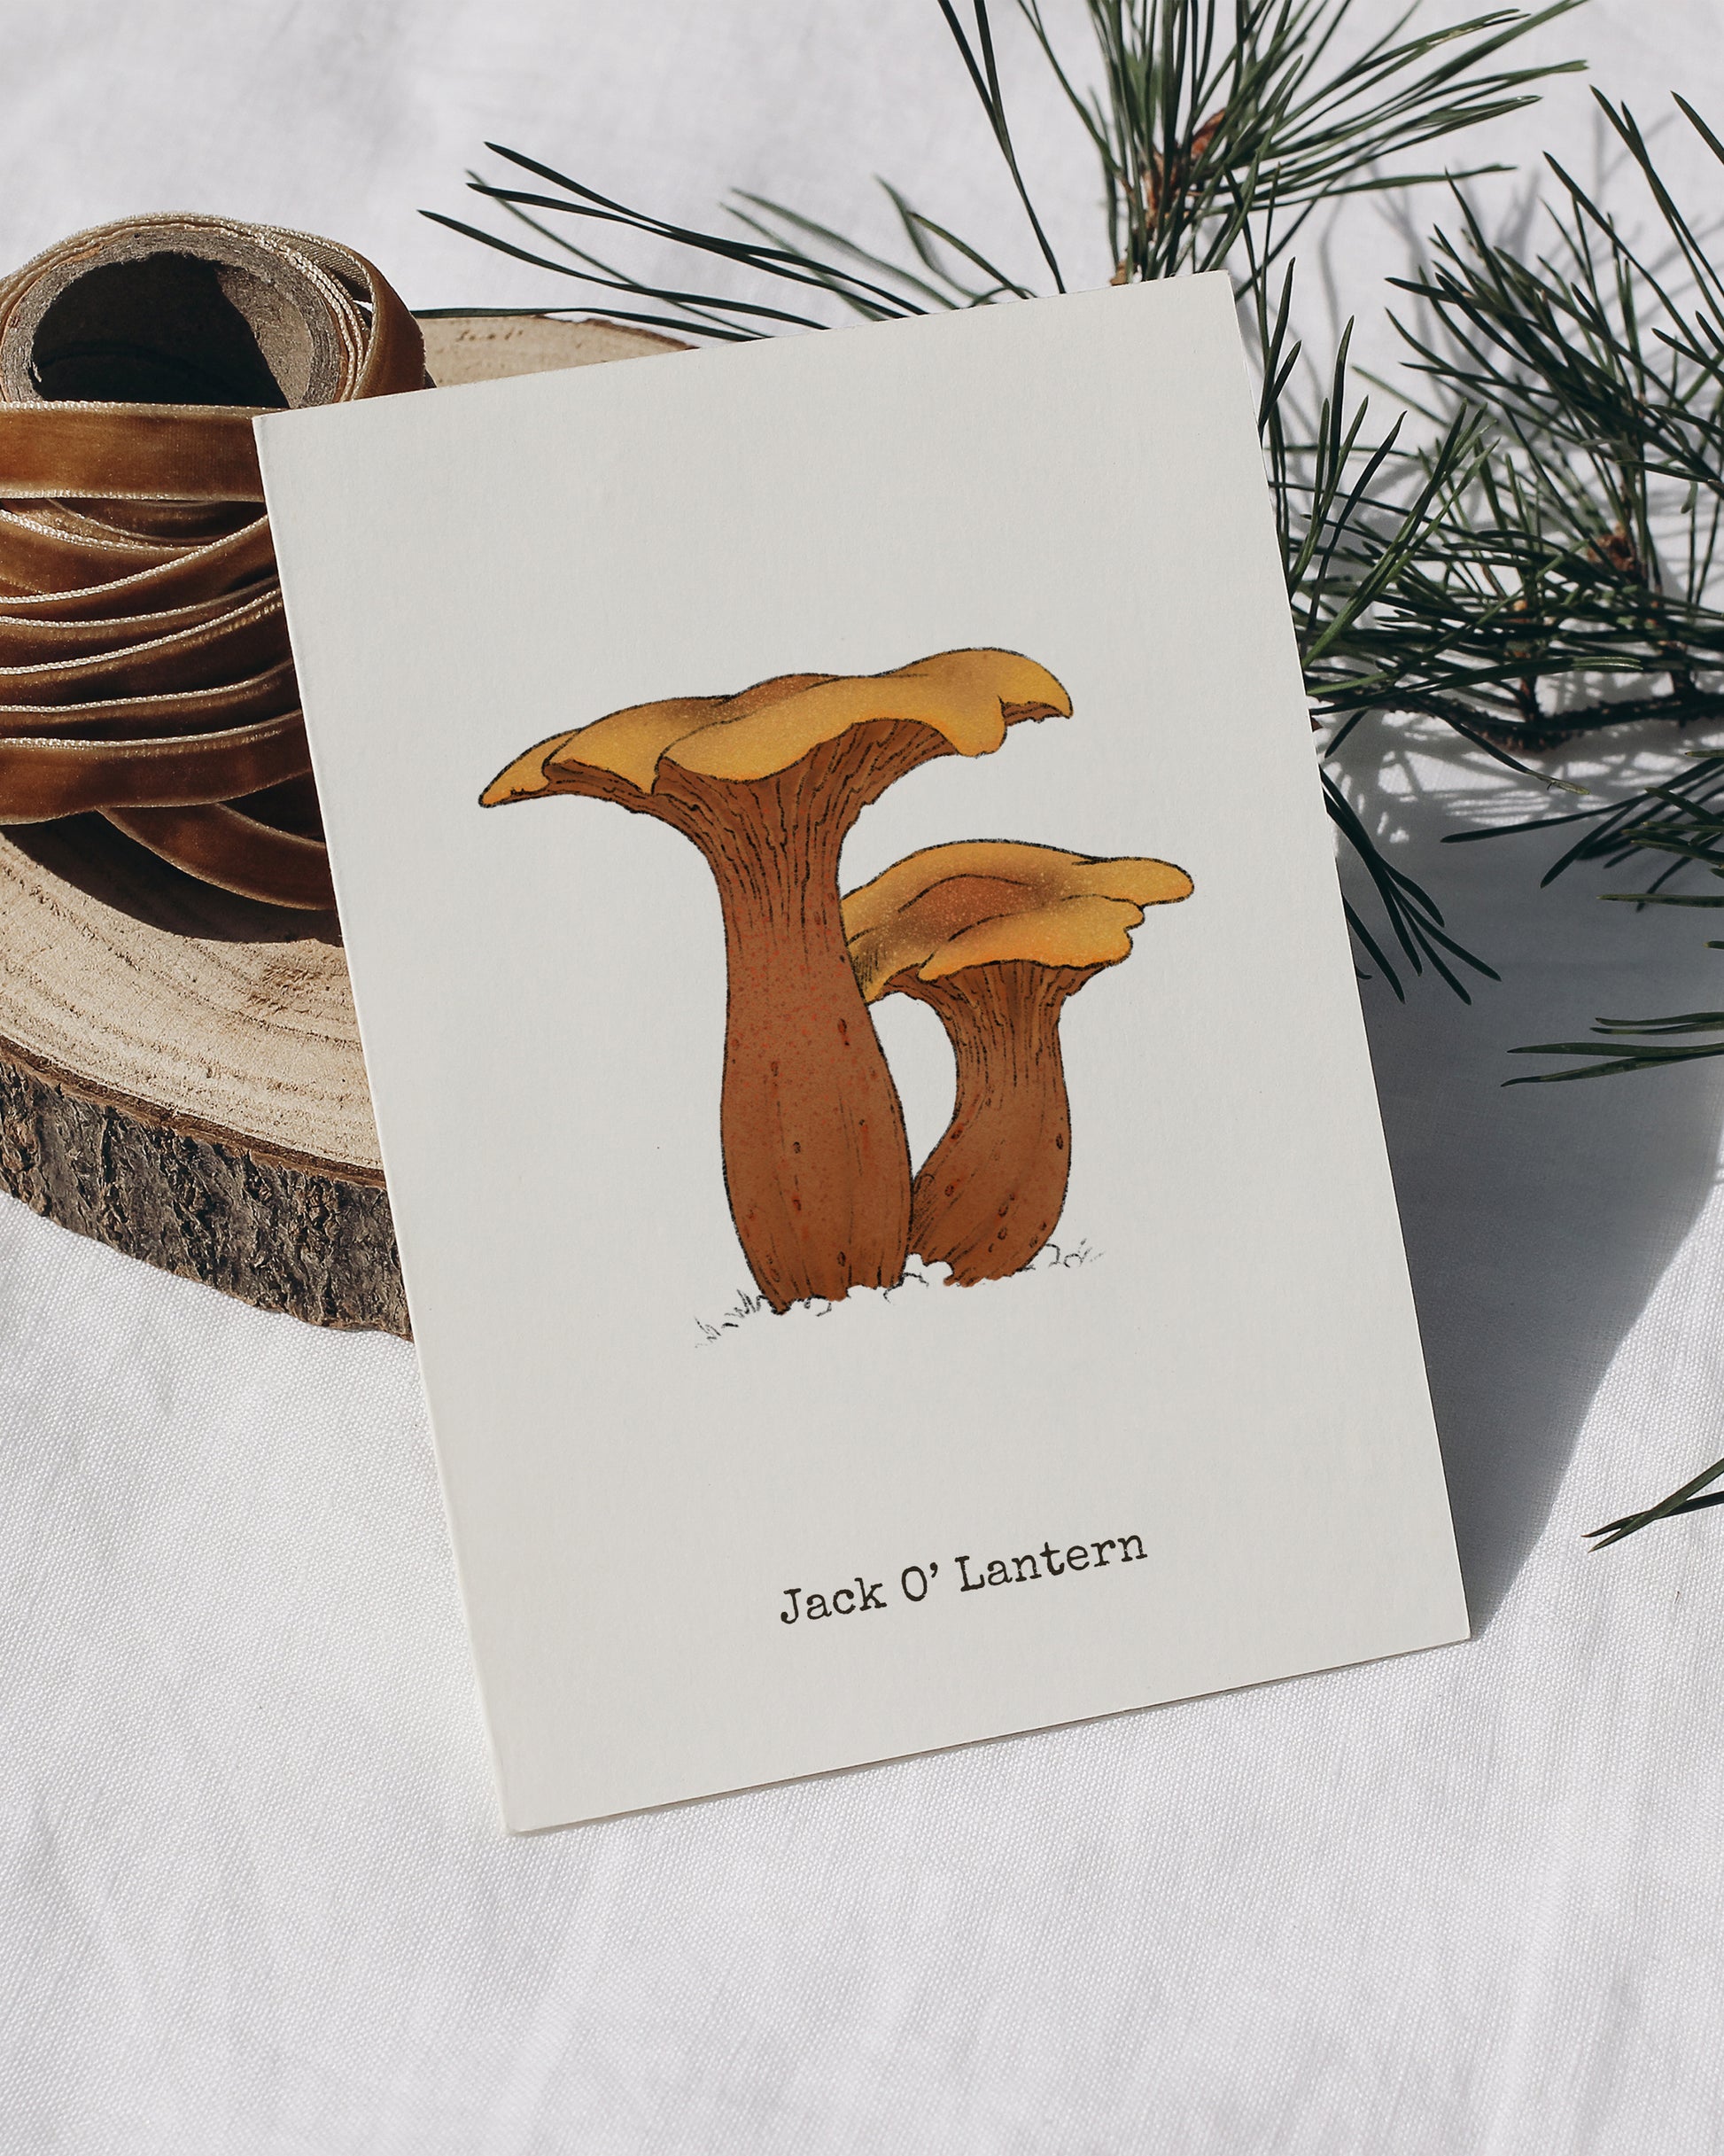 "Jack O'Lantern" by Catherine Hébert - Jack O'Lantern Mushroom Art Print